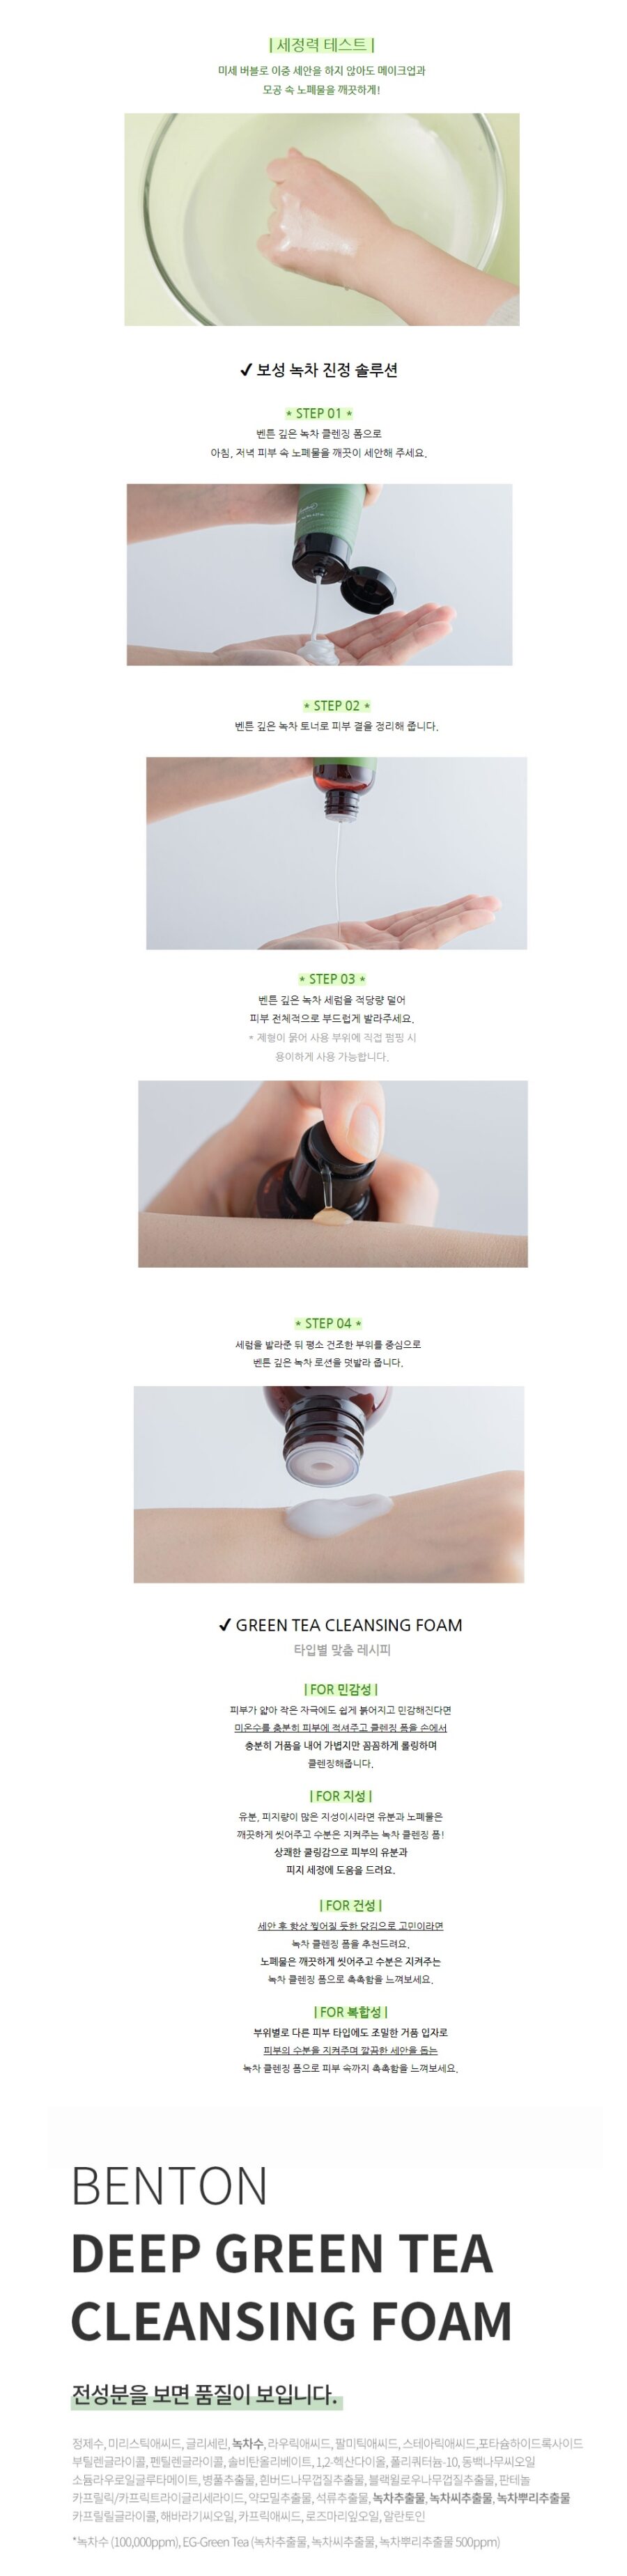 Benton Deep Green Tea Cleansing Foam korean skincare product online shop malaysia czech uk2